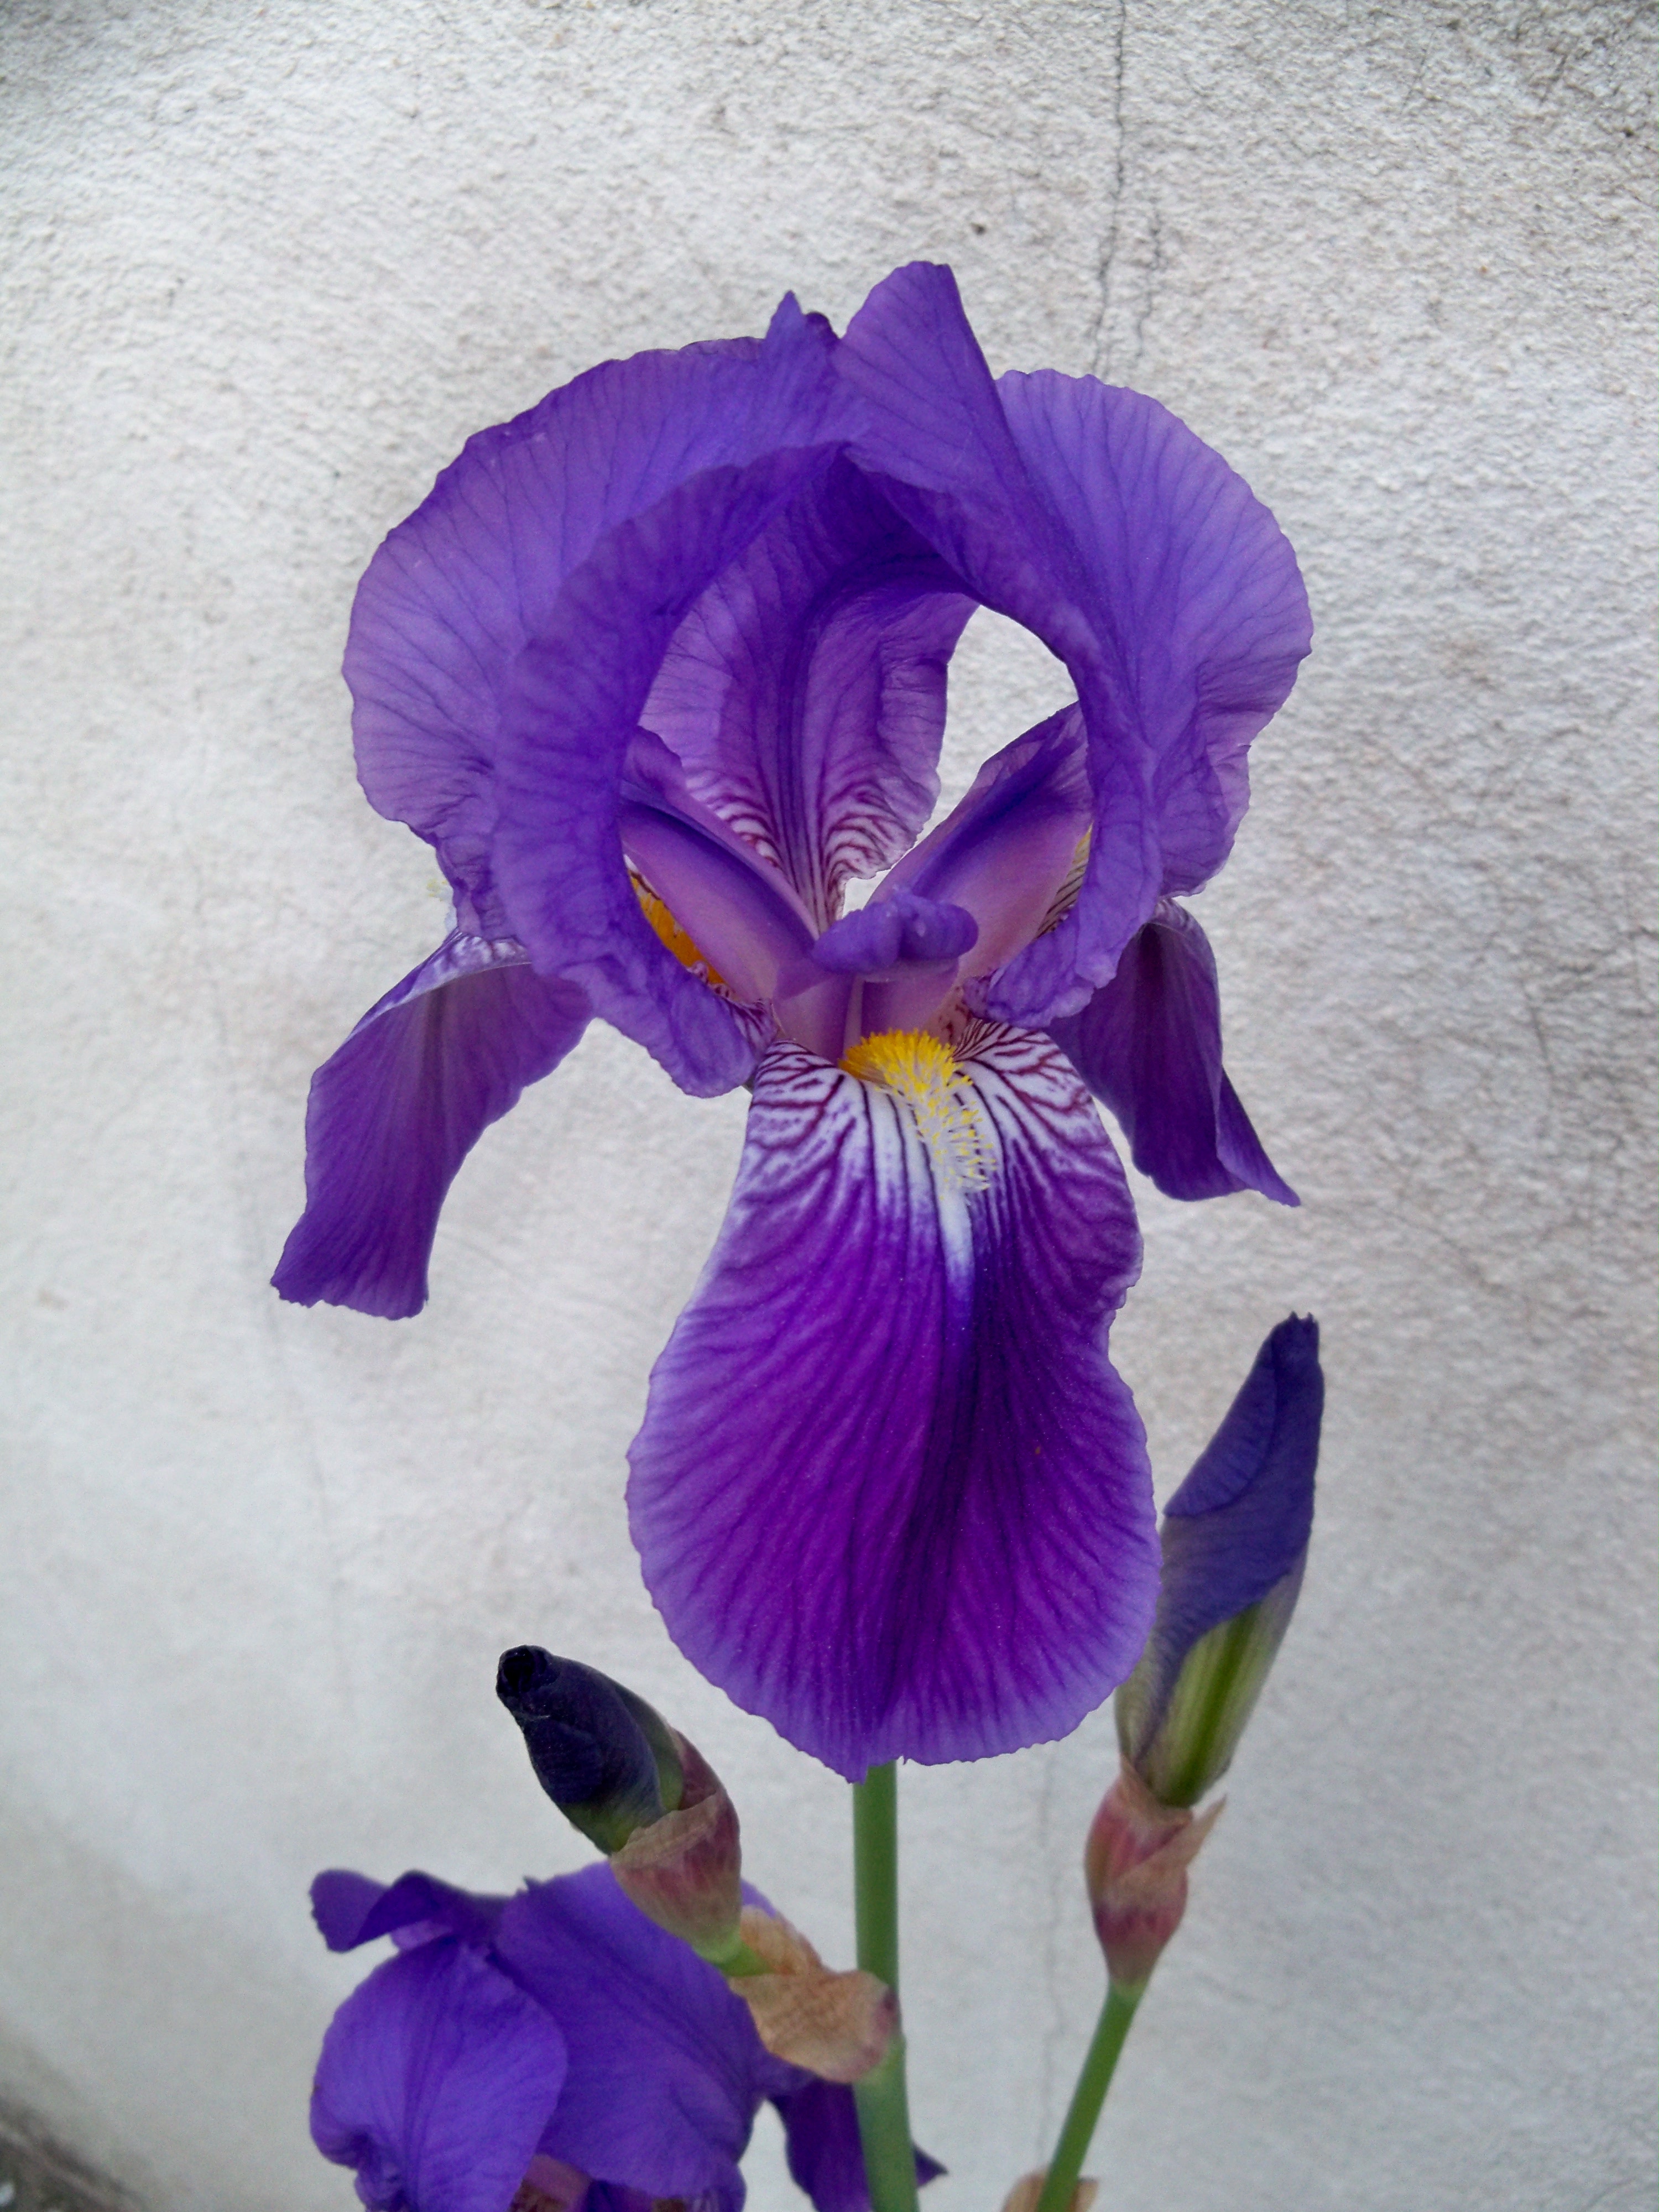 File:Iris mauve 2.jpg - Wikimedia Commons